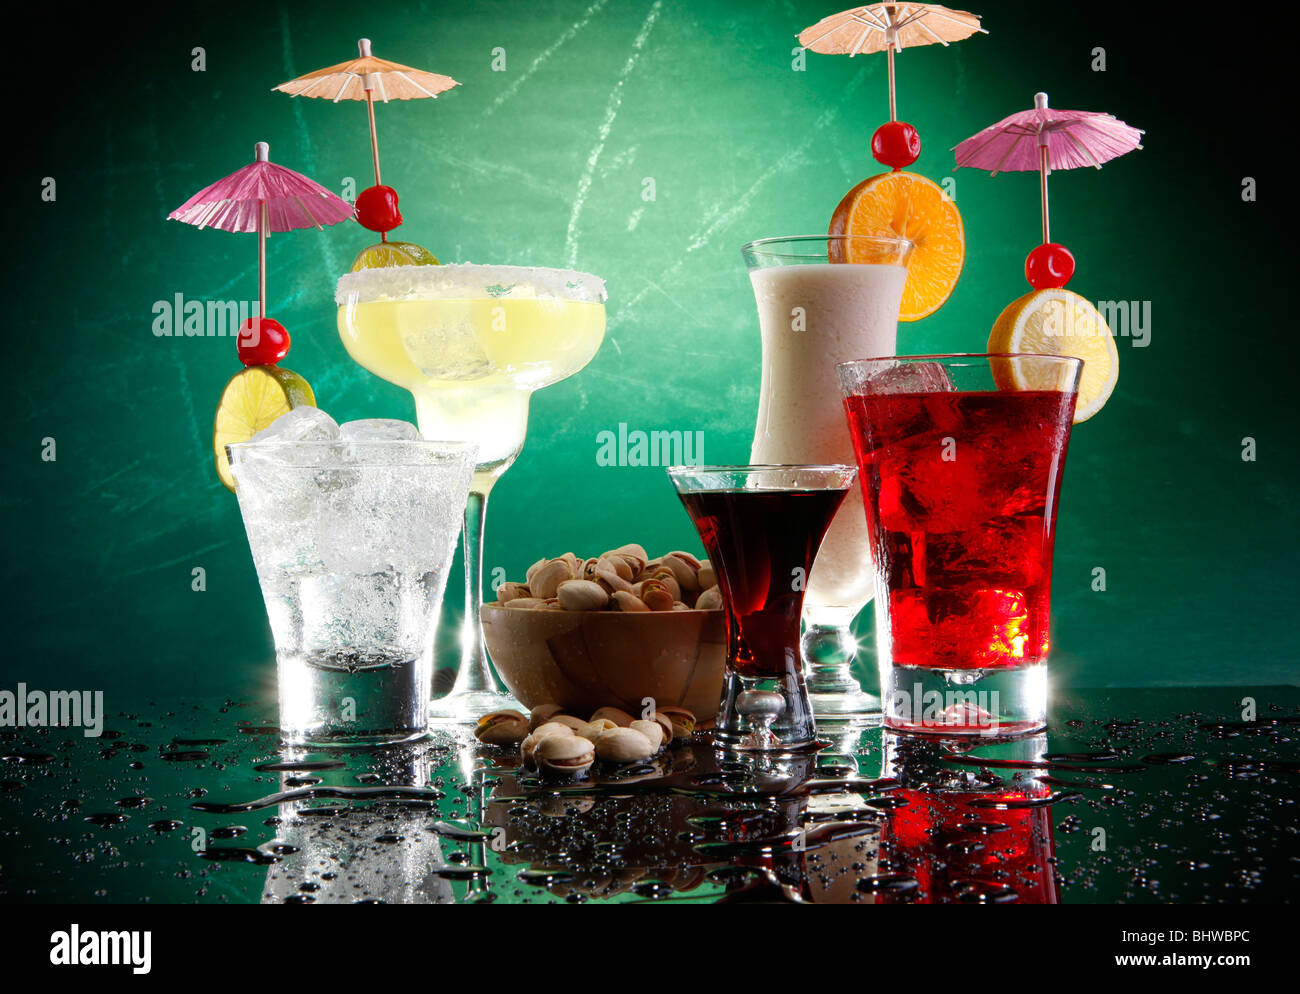 Margarita, Fizz, coffee liquor, cosmopolitan on the rocks and Colada with pistachio Stock Photo